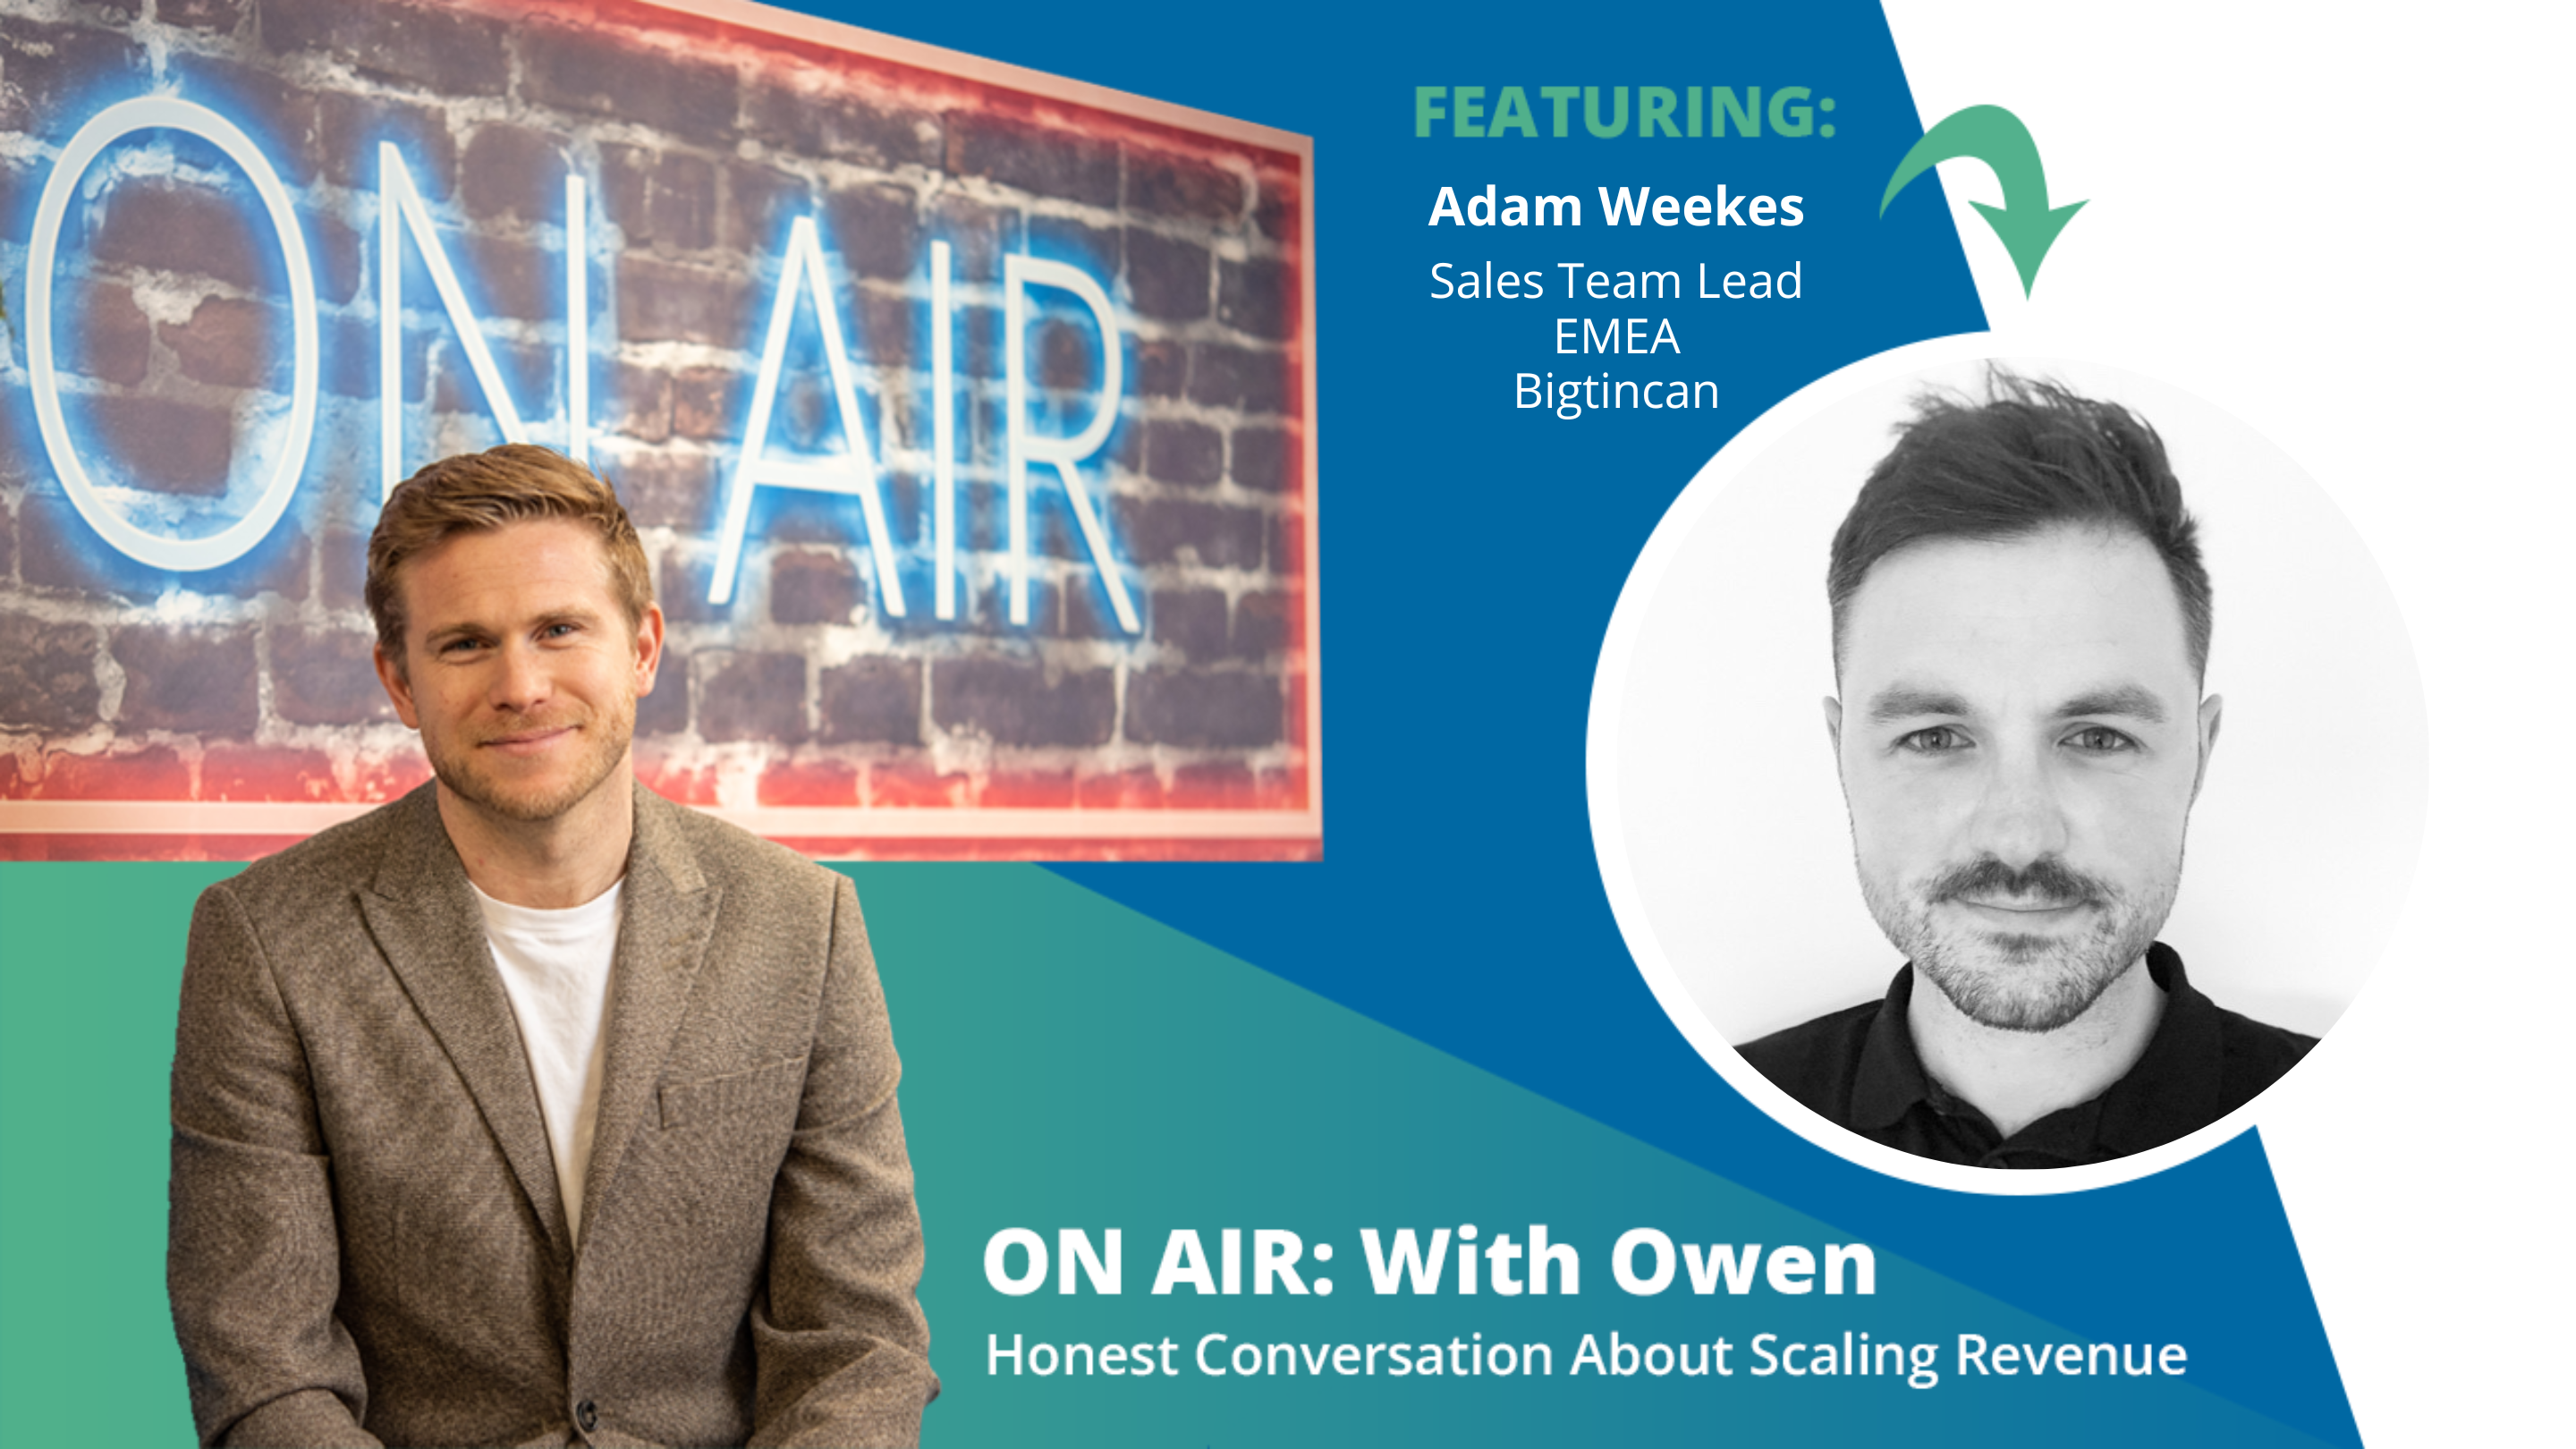 ON AIR: With Owen Episode 71 Featuring Adam Weekes – Sales Lead, EMEA at Bigtincan